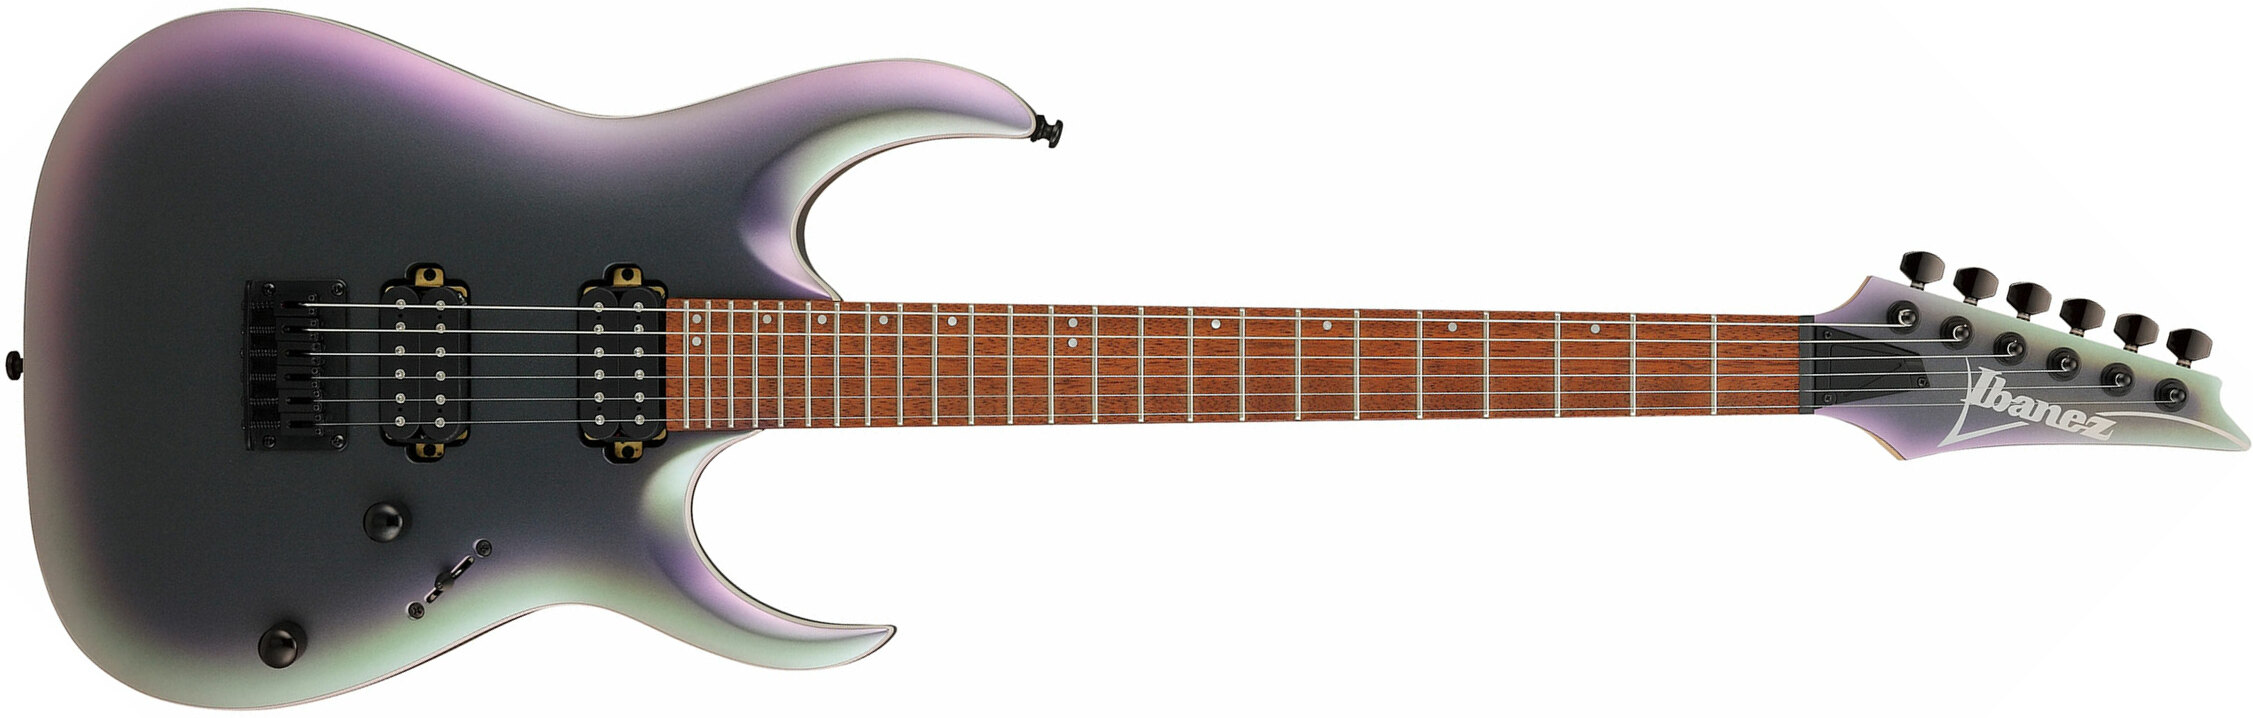 Ibanez Rga42ex Bam Standard Ht Hh Jat - Black Aurora Burst Matte - E-Gitarre in Str-Form - Main picture